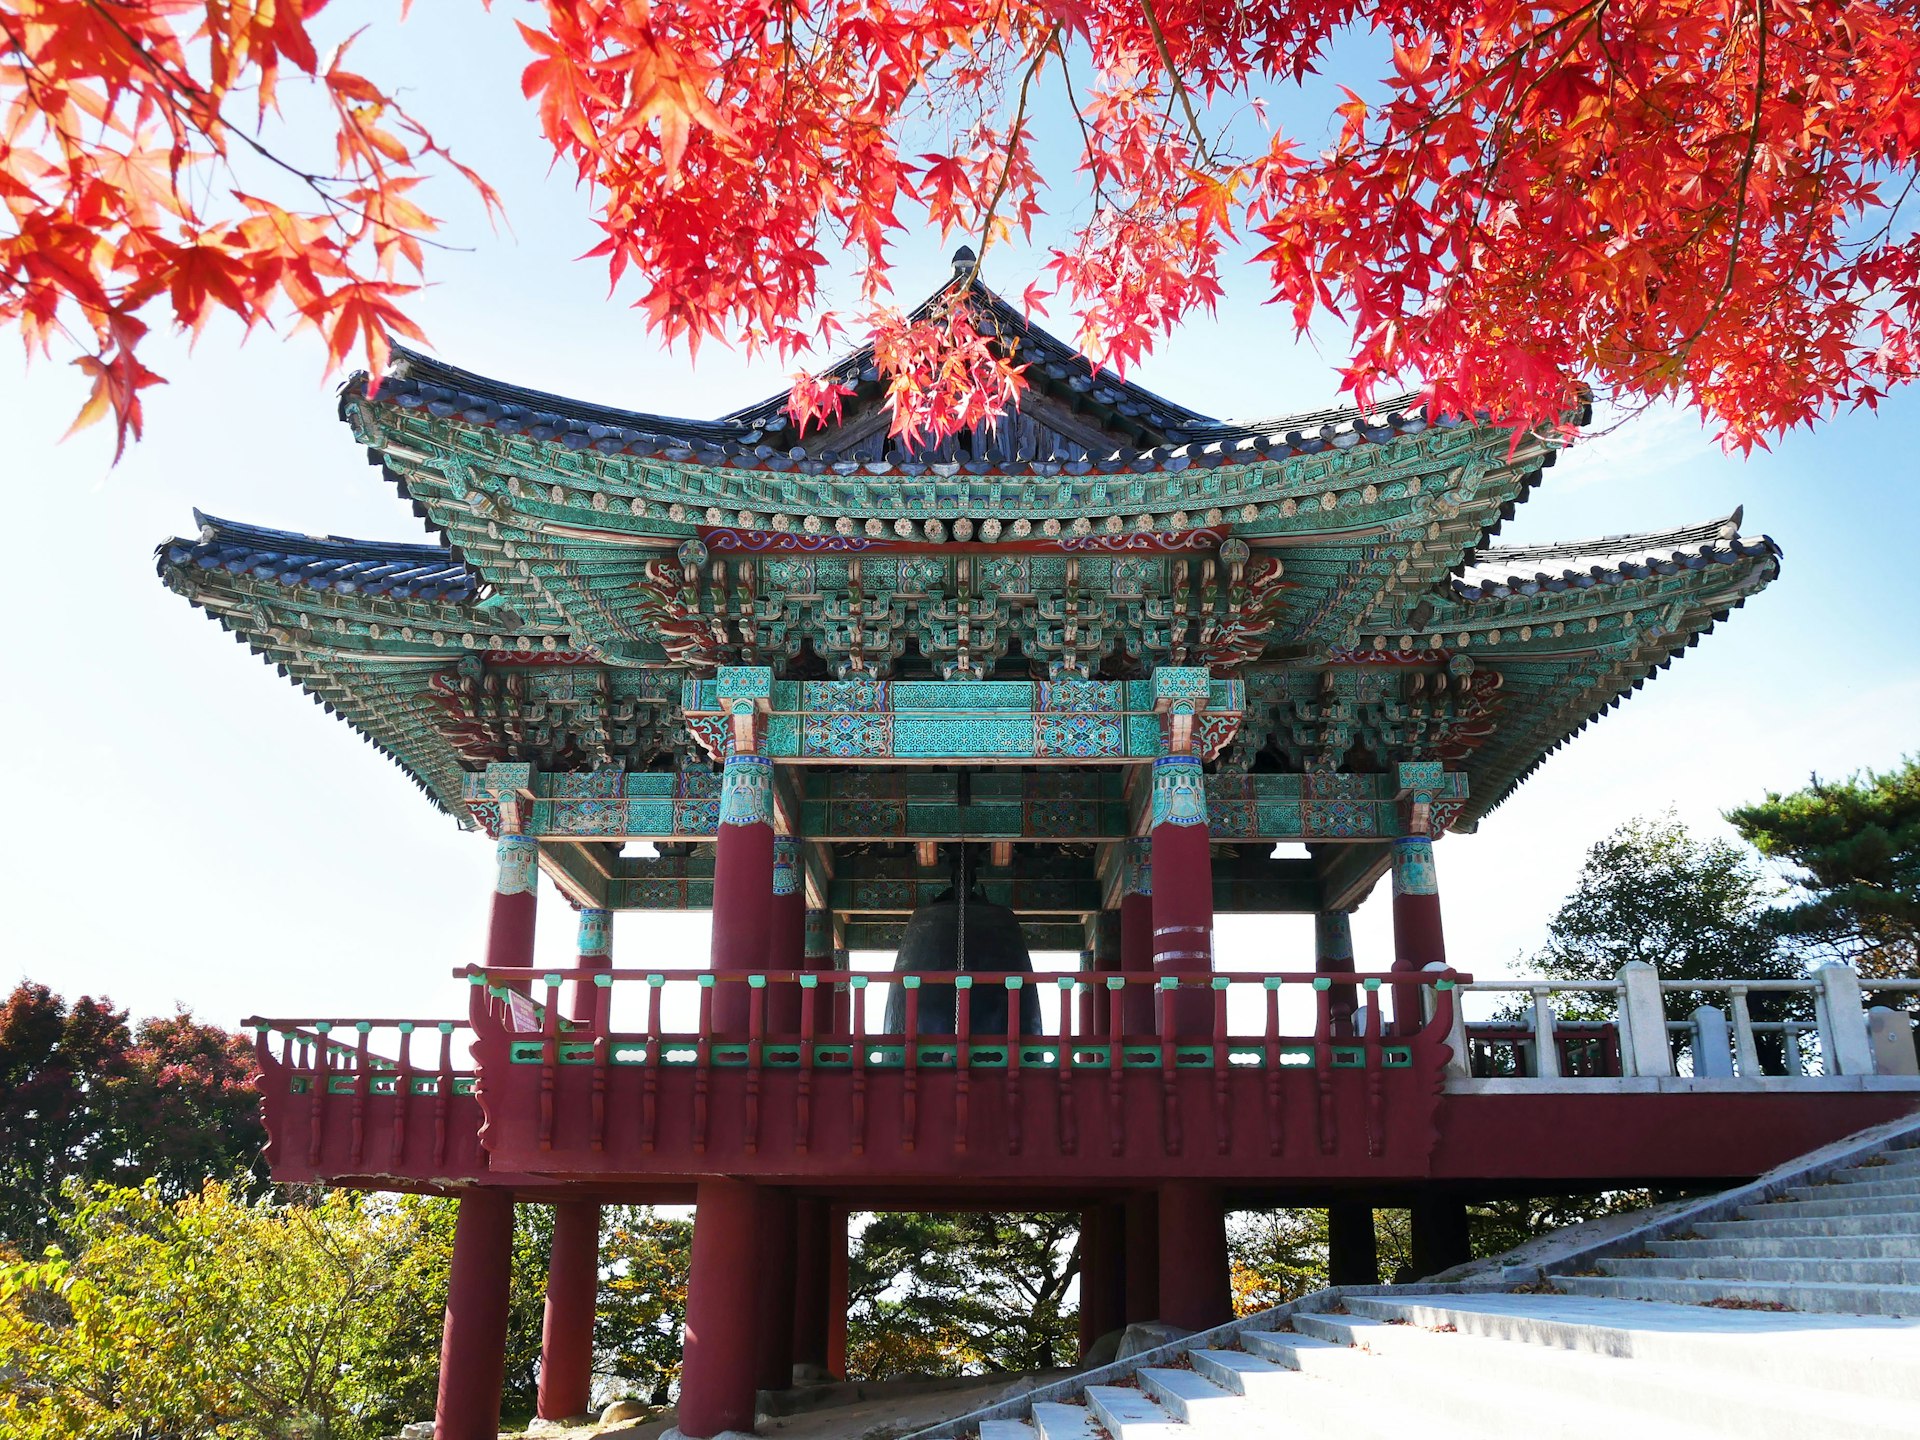 Bell pavilion at Seokguram Grotto in Gyeongju, South Korea